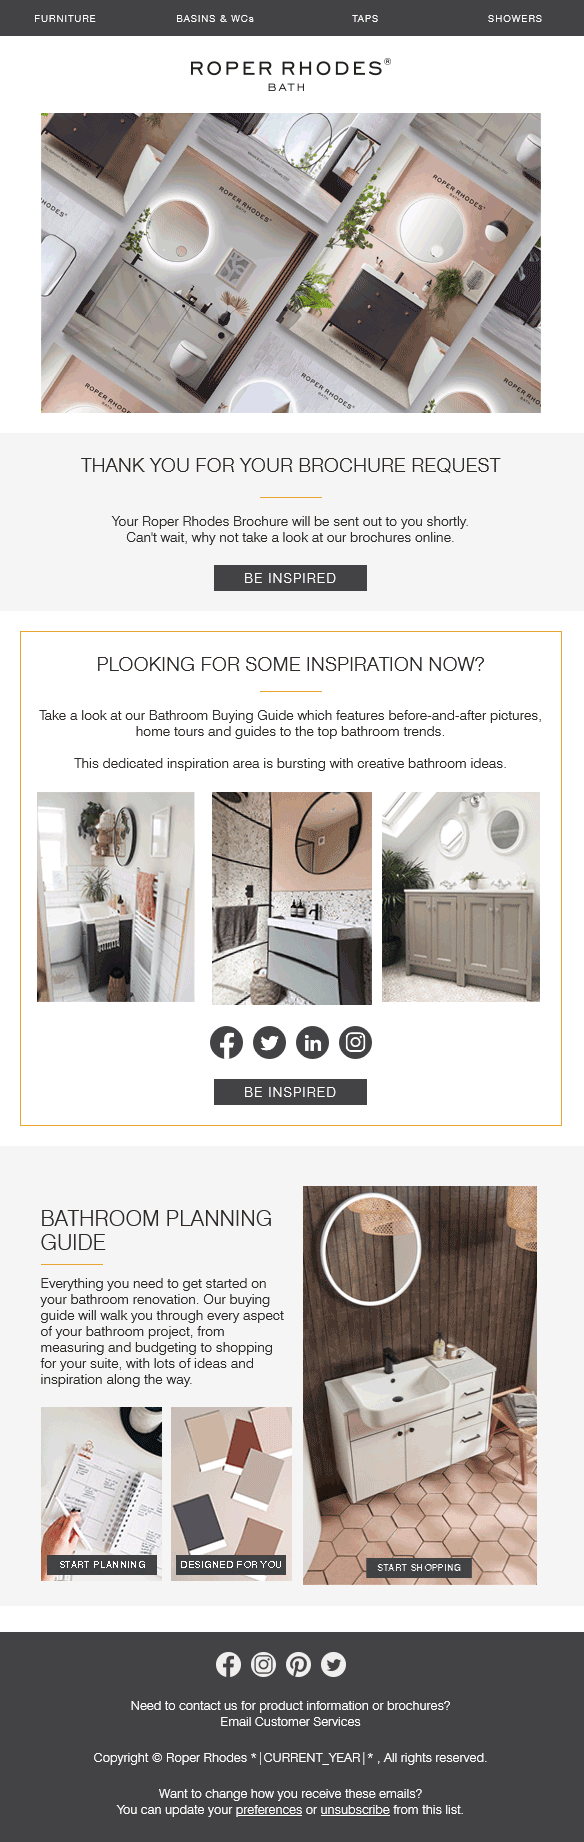 Email Templates Created For Roper Rhodes Marketing Bath rooms desktop design